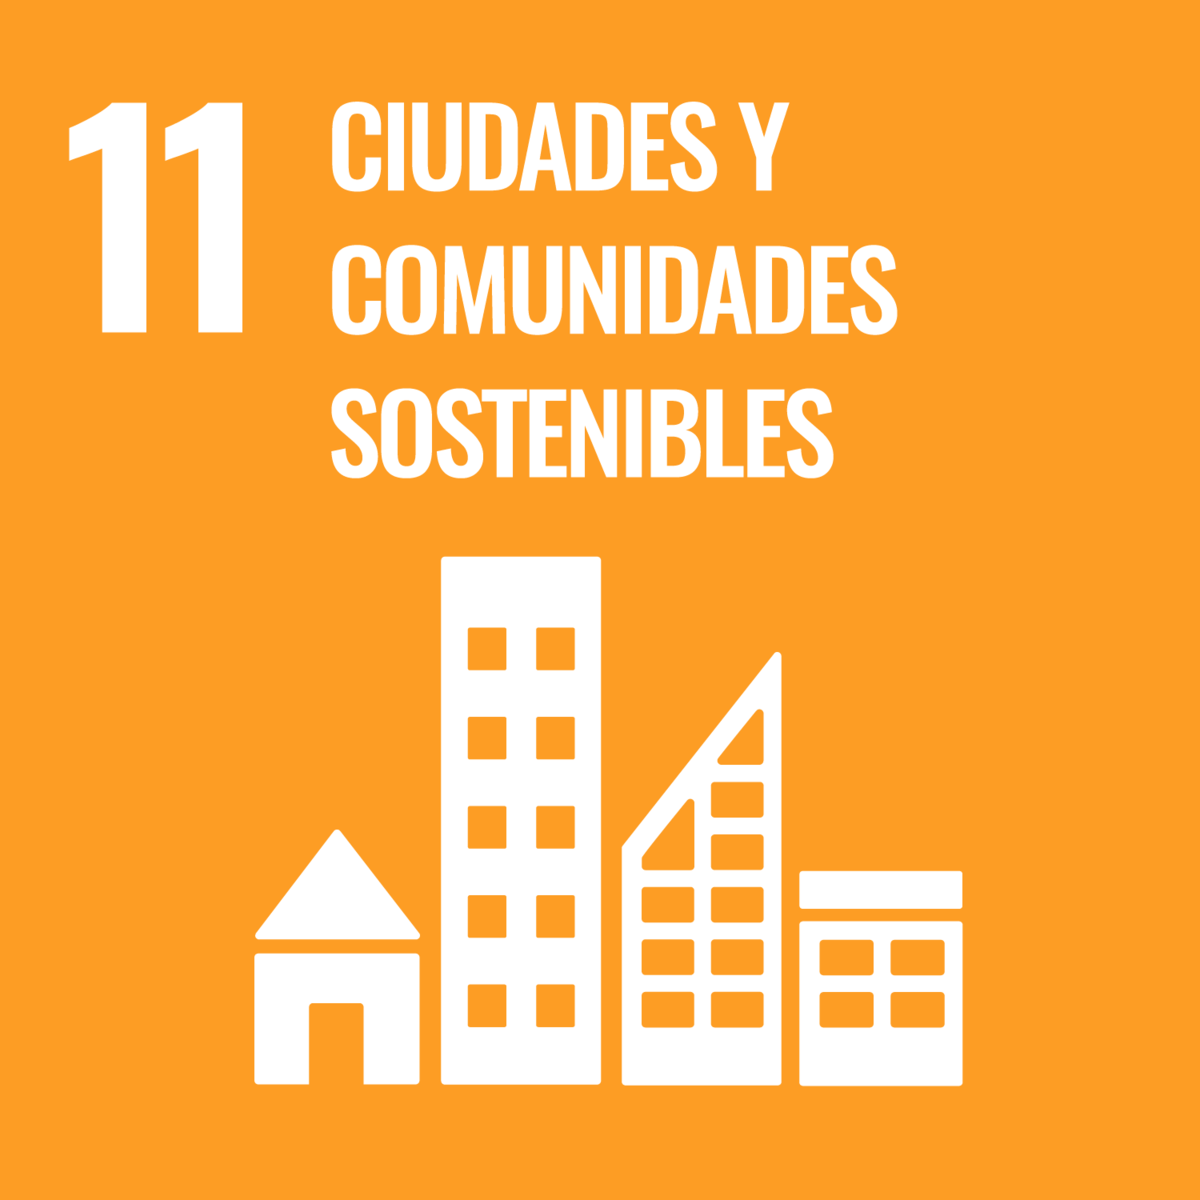 11 ciudades et comunidades sostenibiles